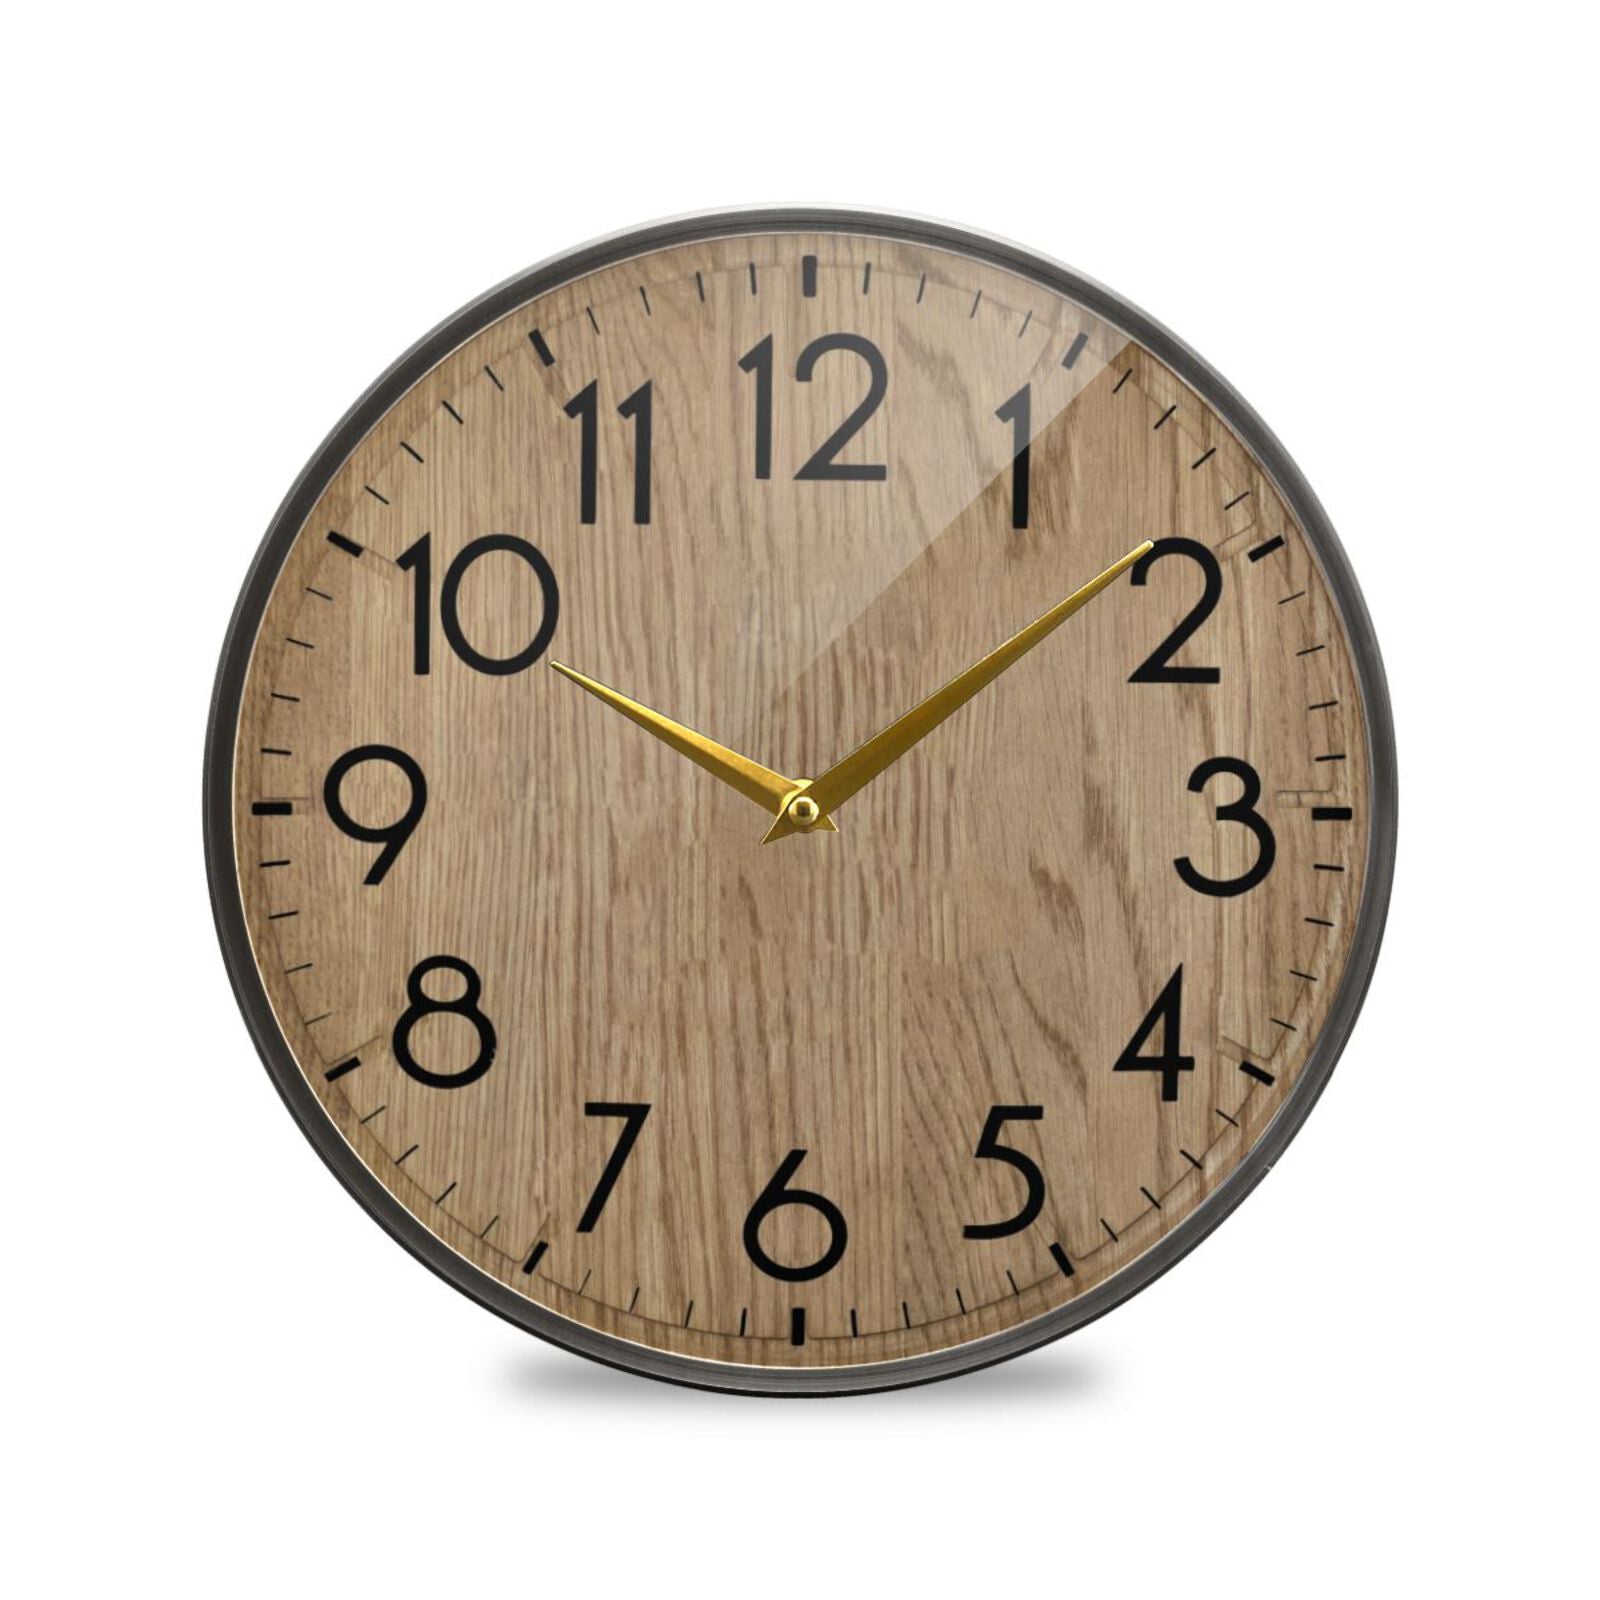 Wood Grain Acrylic Silent Non-Ticking Round Wall Clock